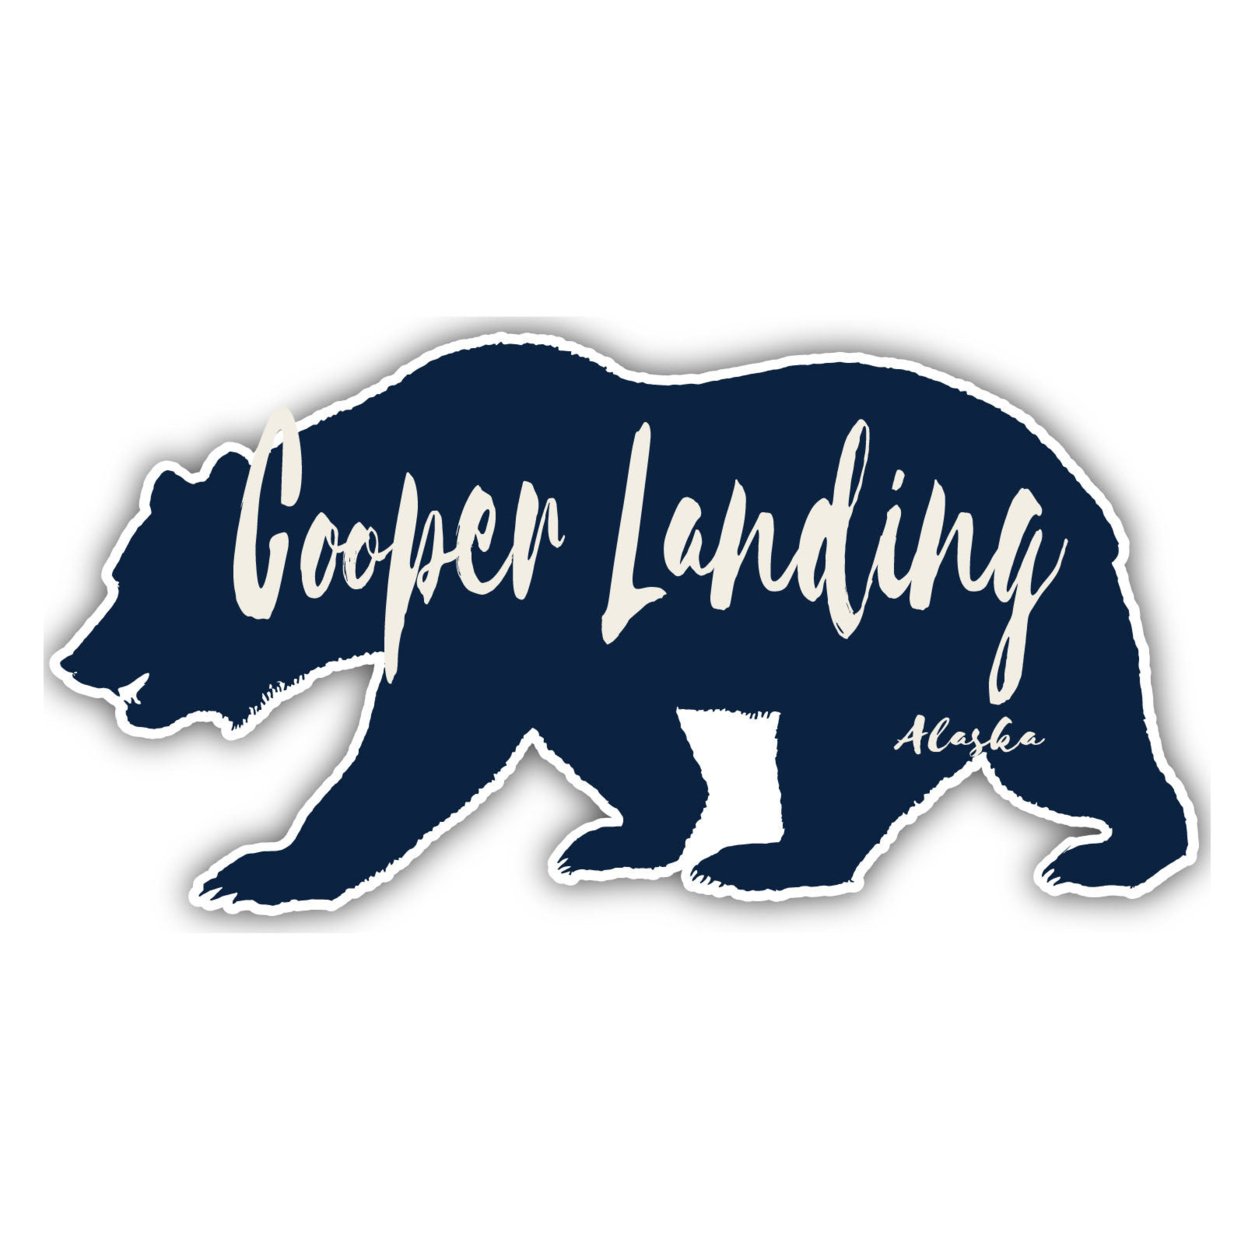 Cooper Landing Alaska Souvenir Decorative Stickers (Choose Theme And Size) - 4-Pack, 6-Inch, Tent